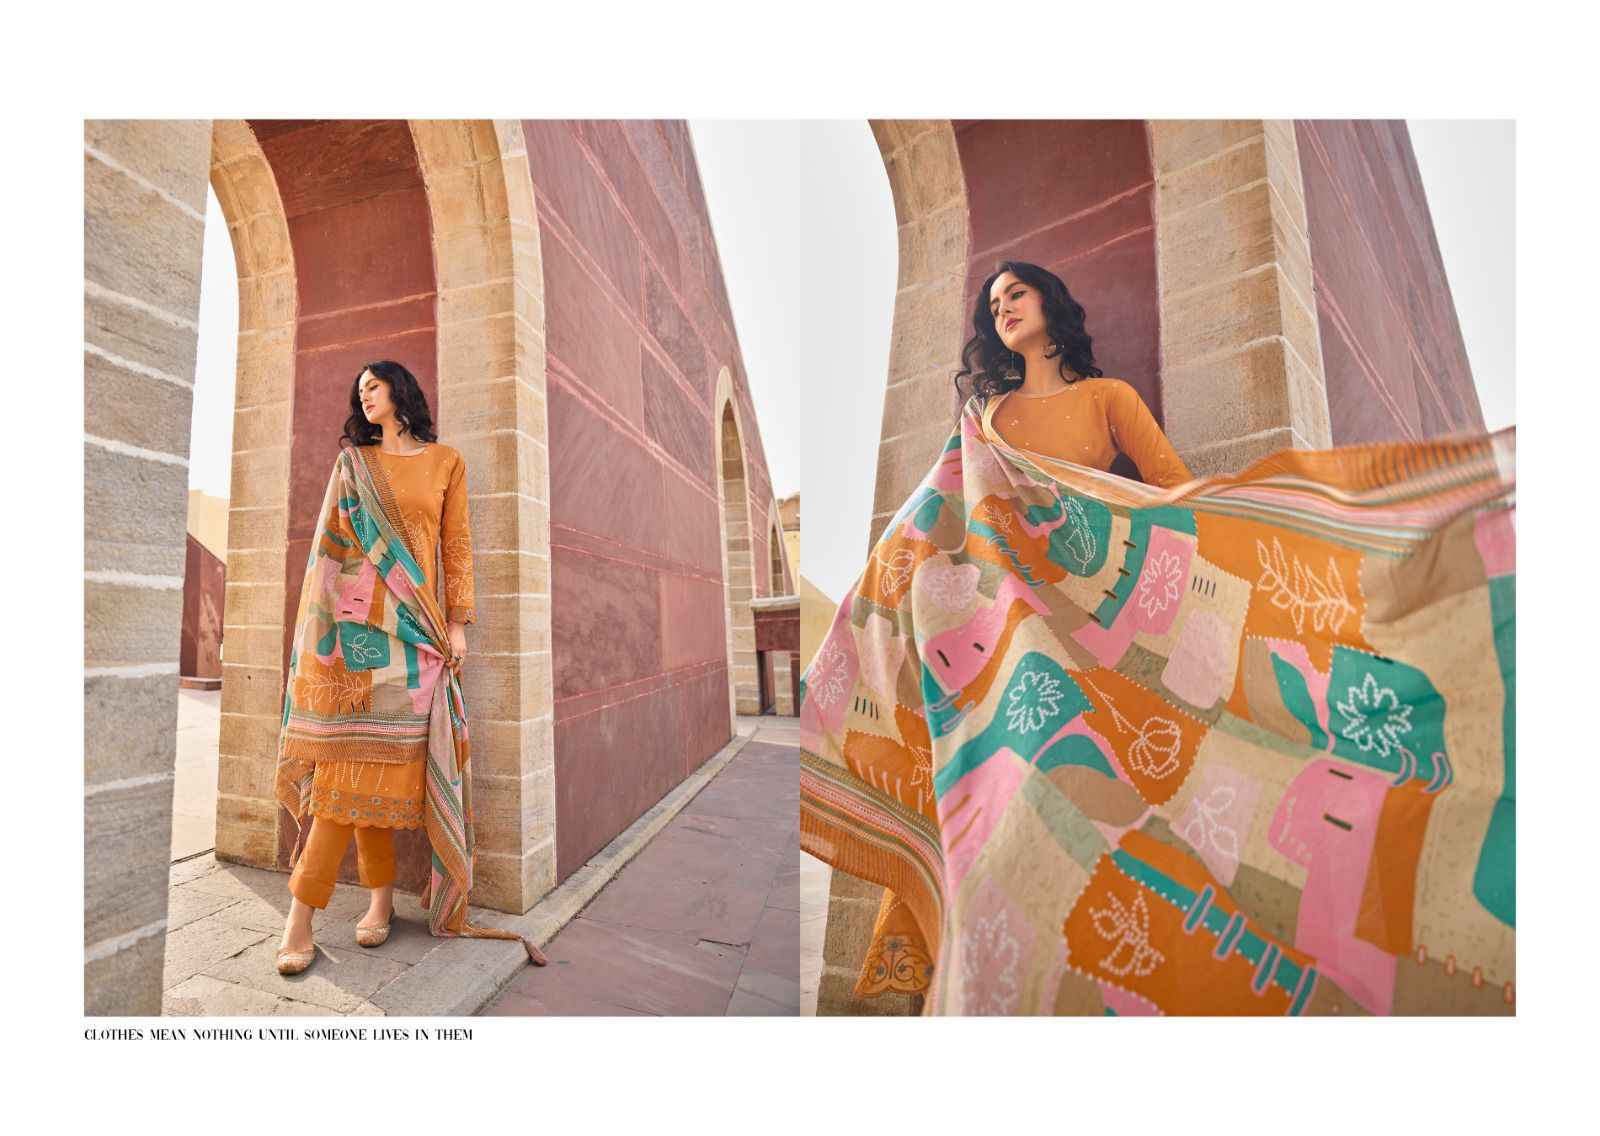 Kilory Trends Printkari Pure Lawn Cotton Dress Material (8 Pc Catalog)